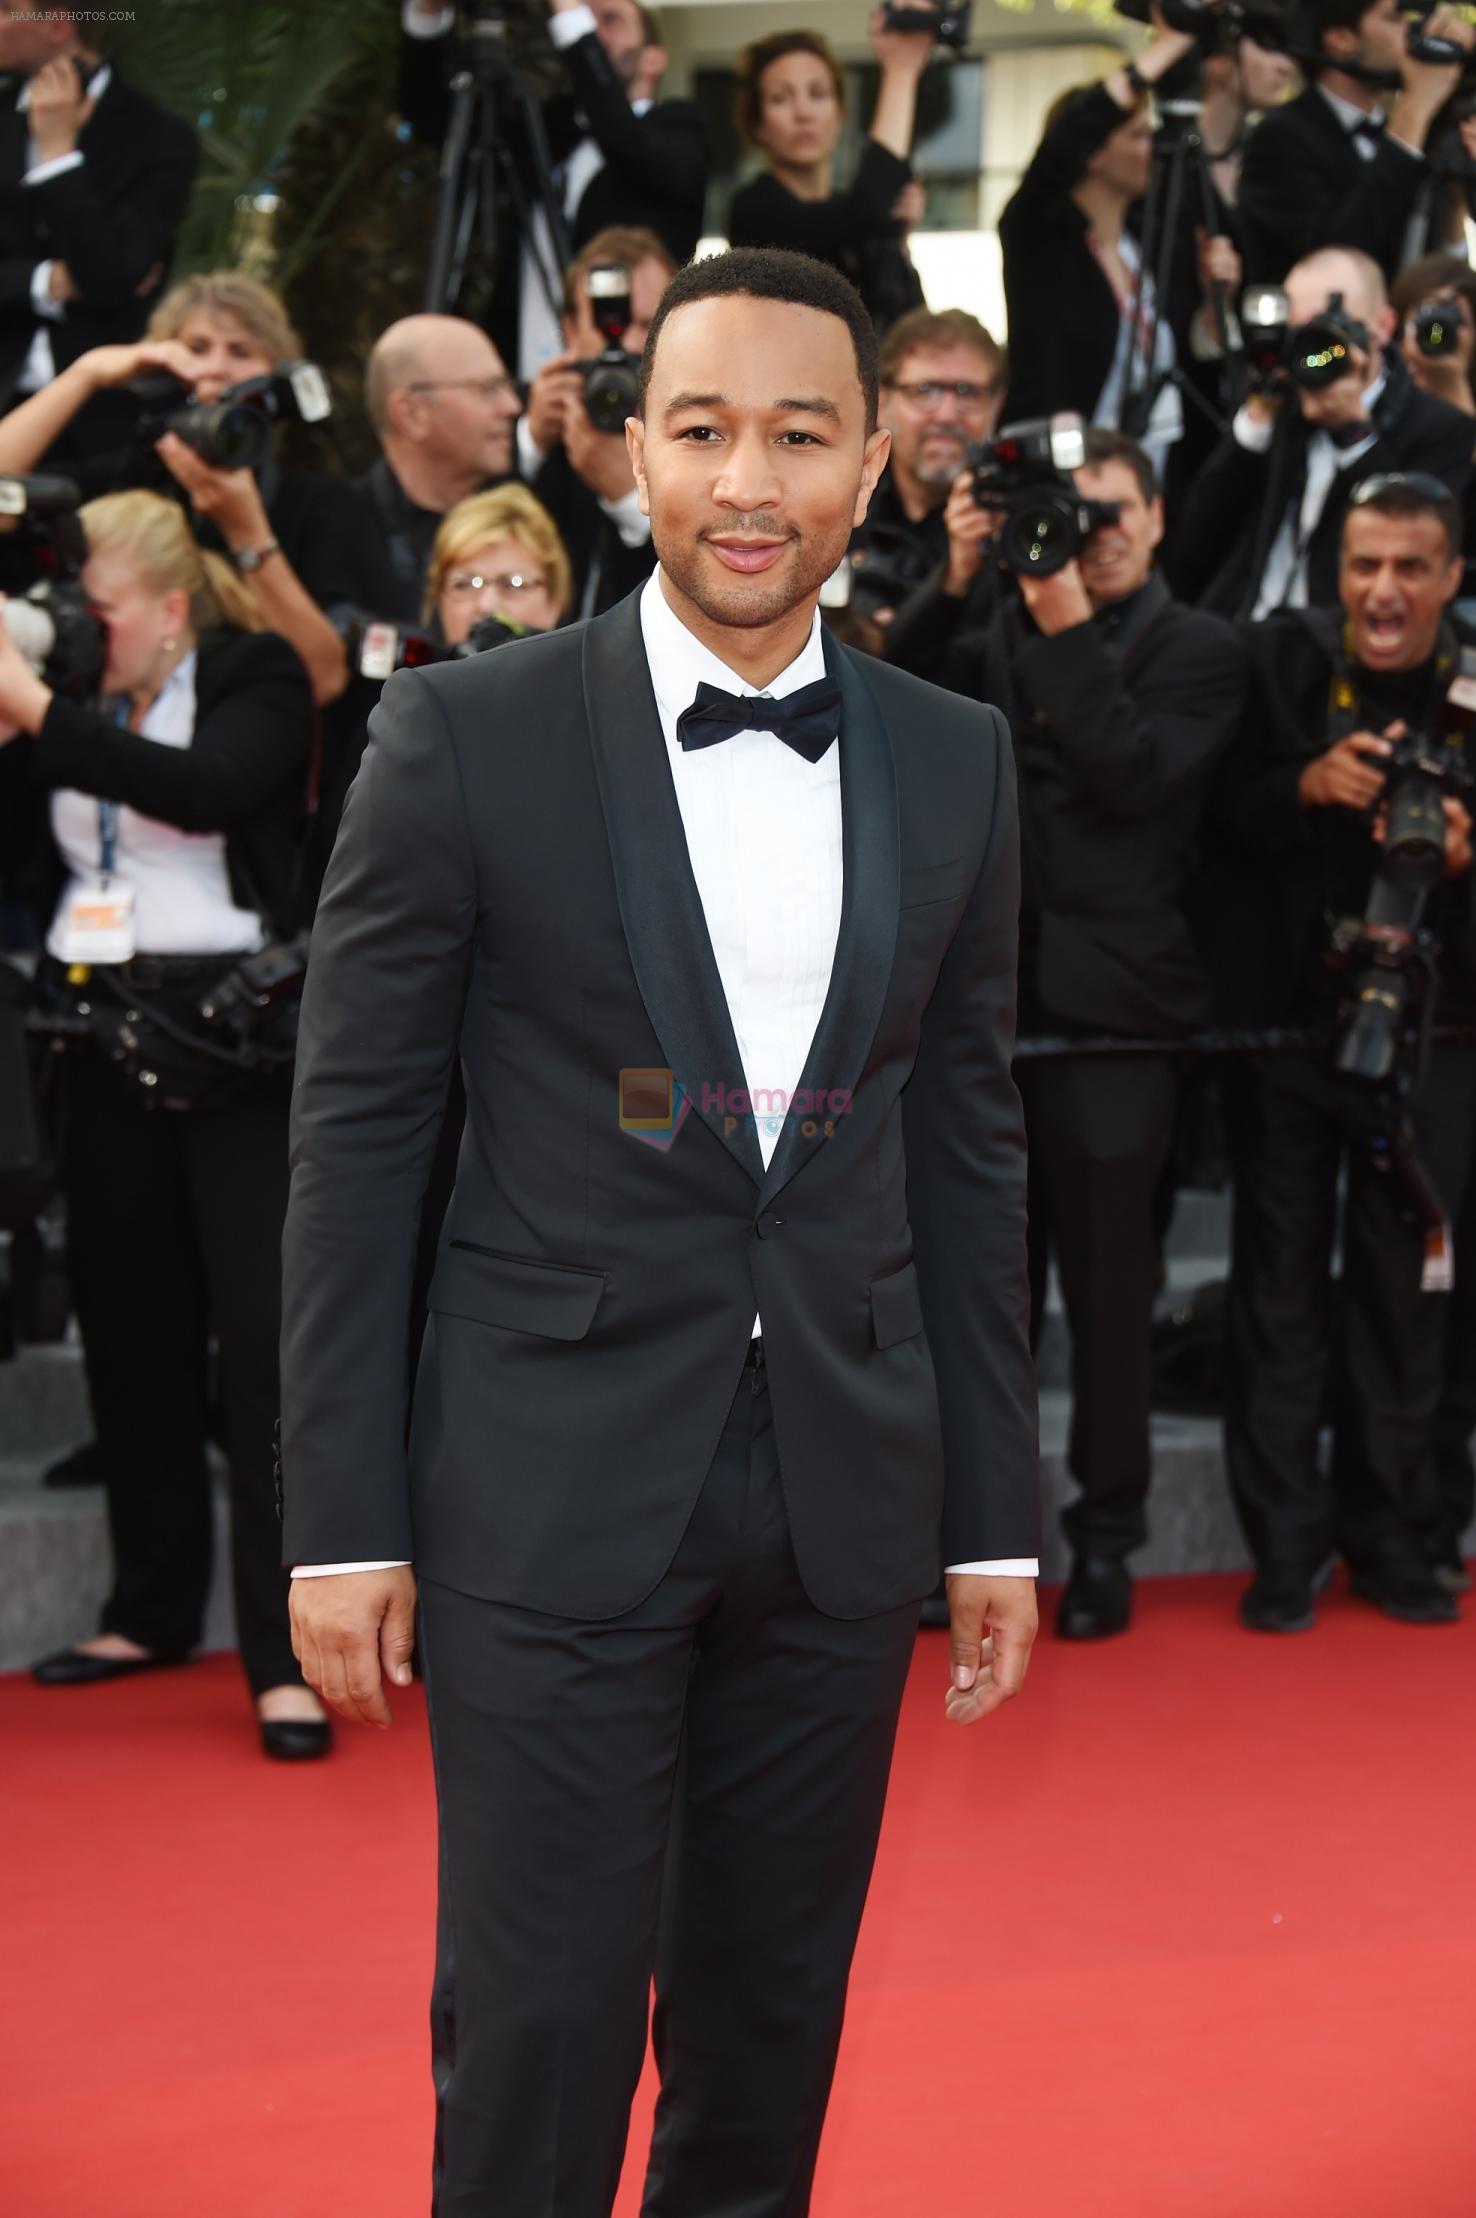 John Legend on Day 1 at Cannes Film Festival 2015 Red Carpet